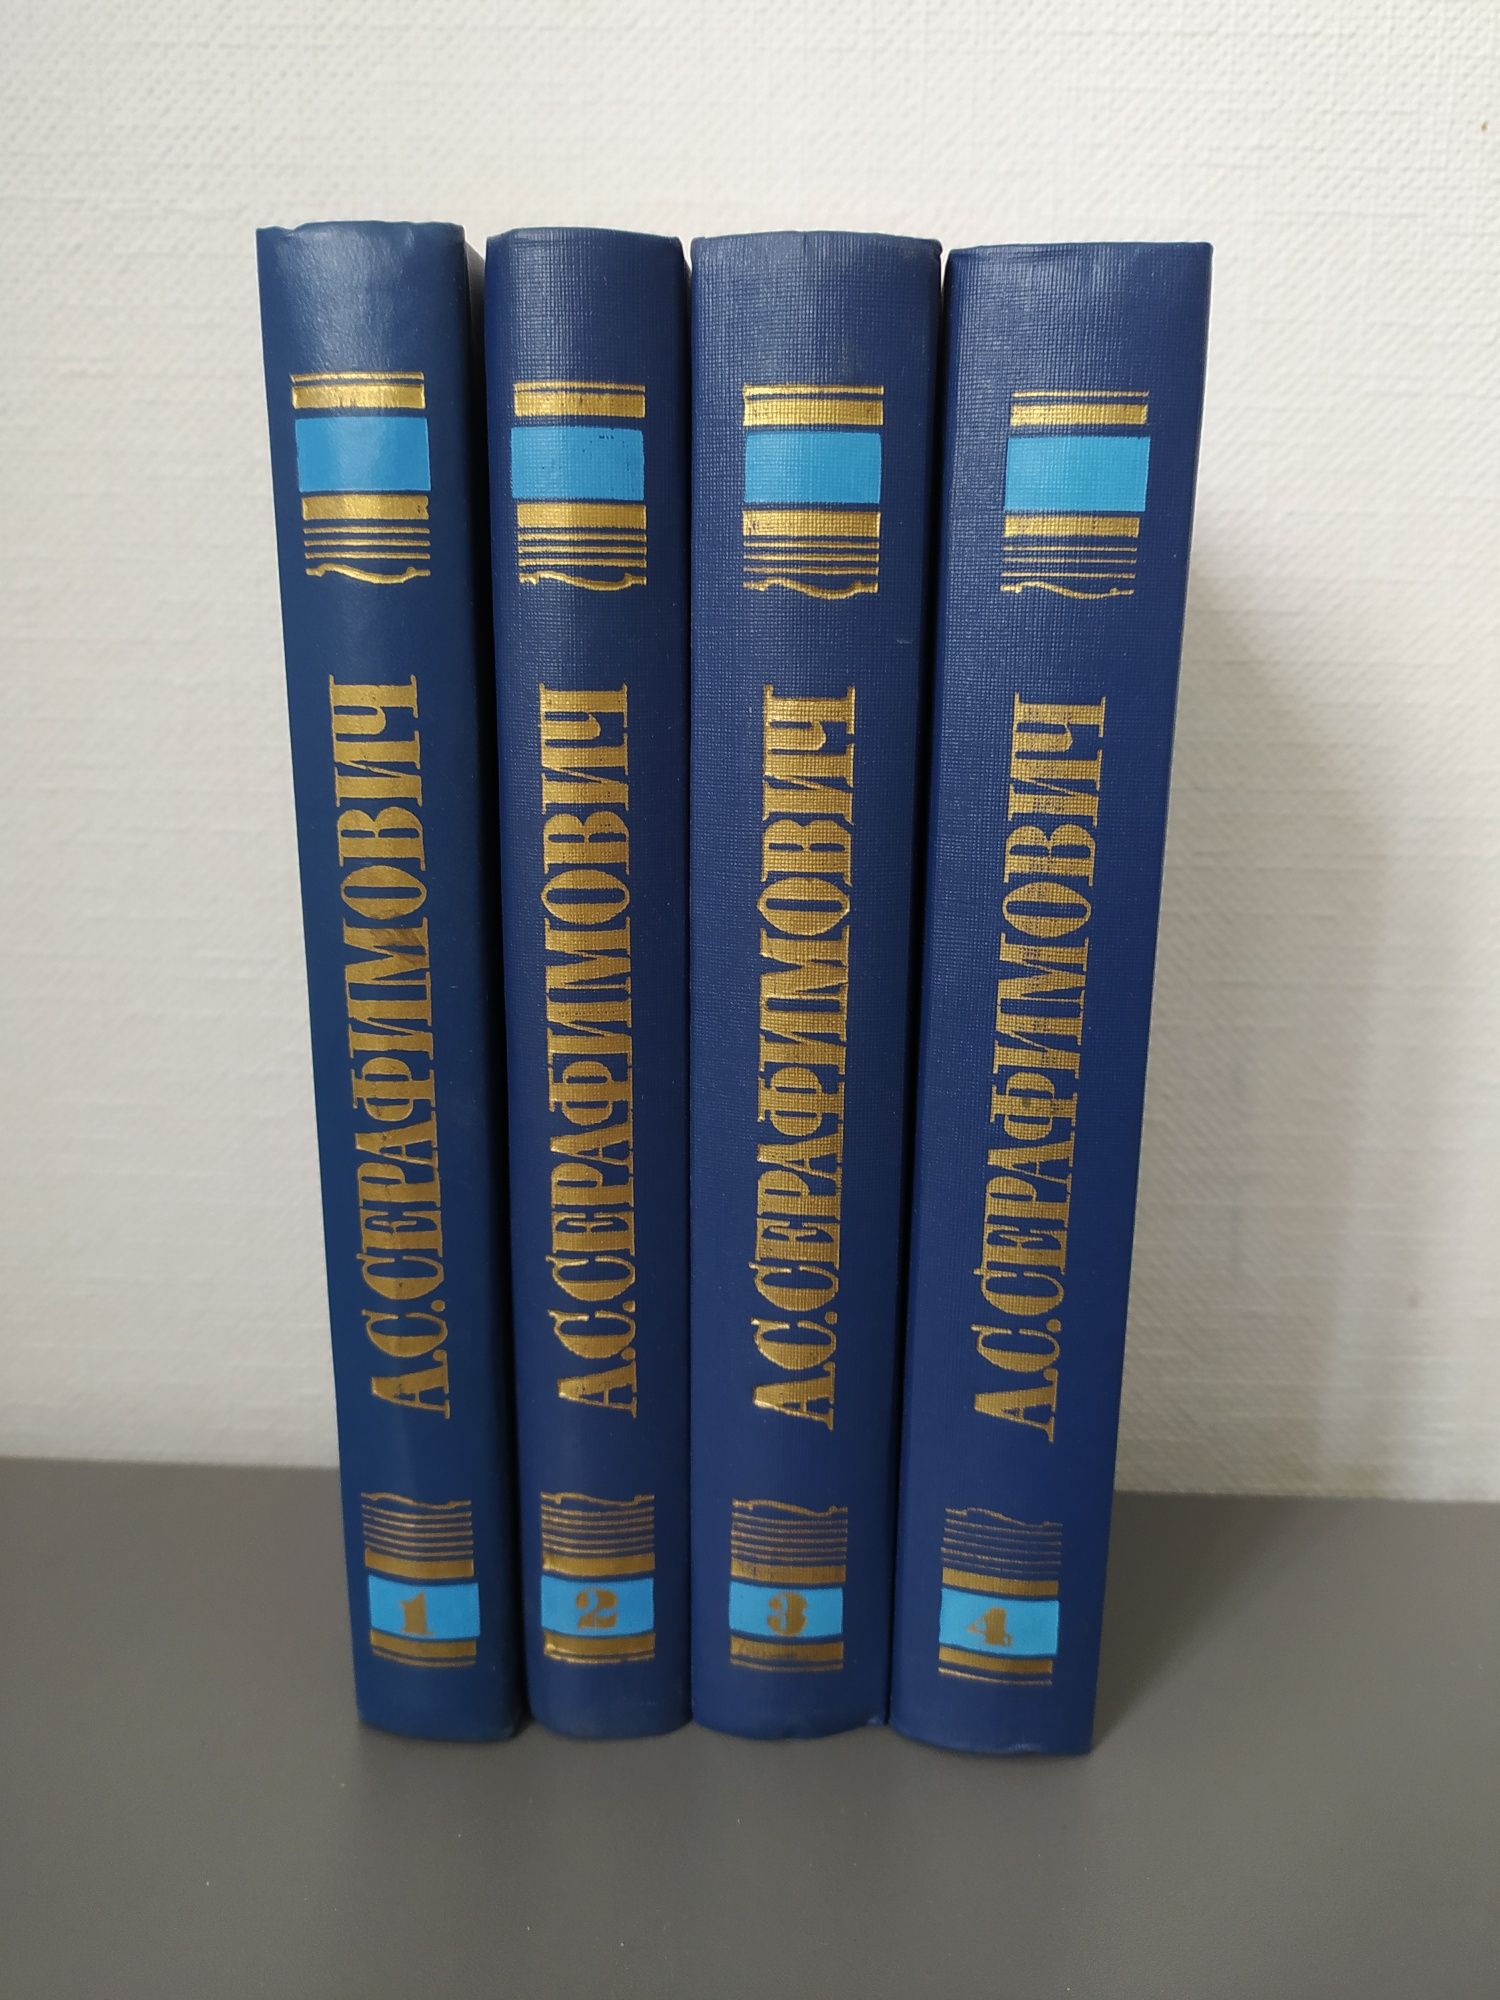 А.С.Серафимович. "Собрание сочинений в 4-х томах".